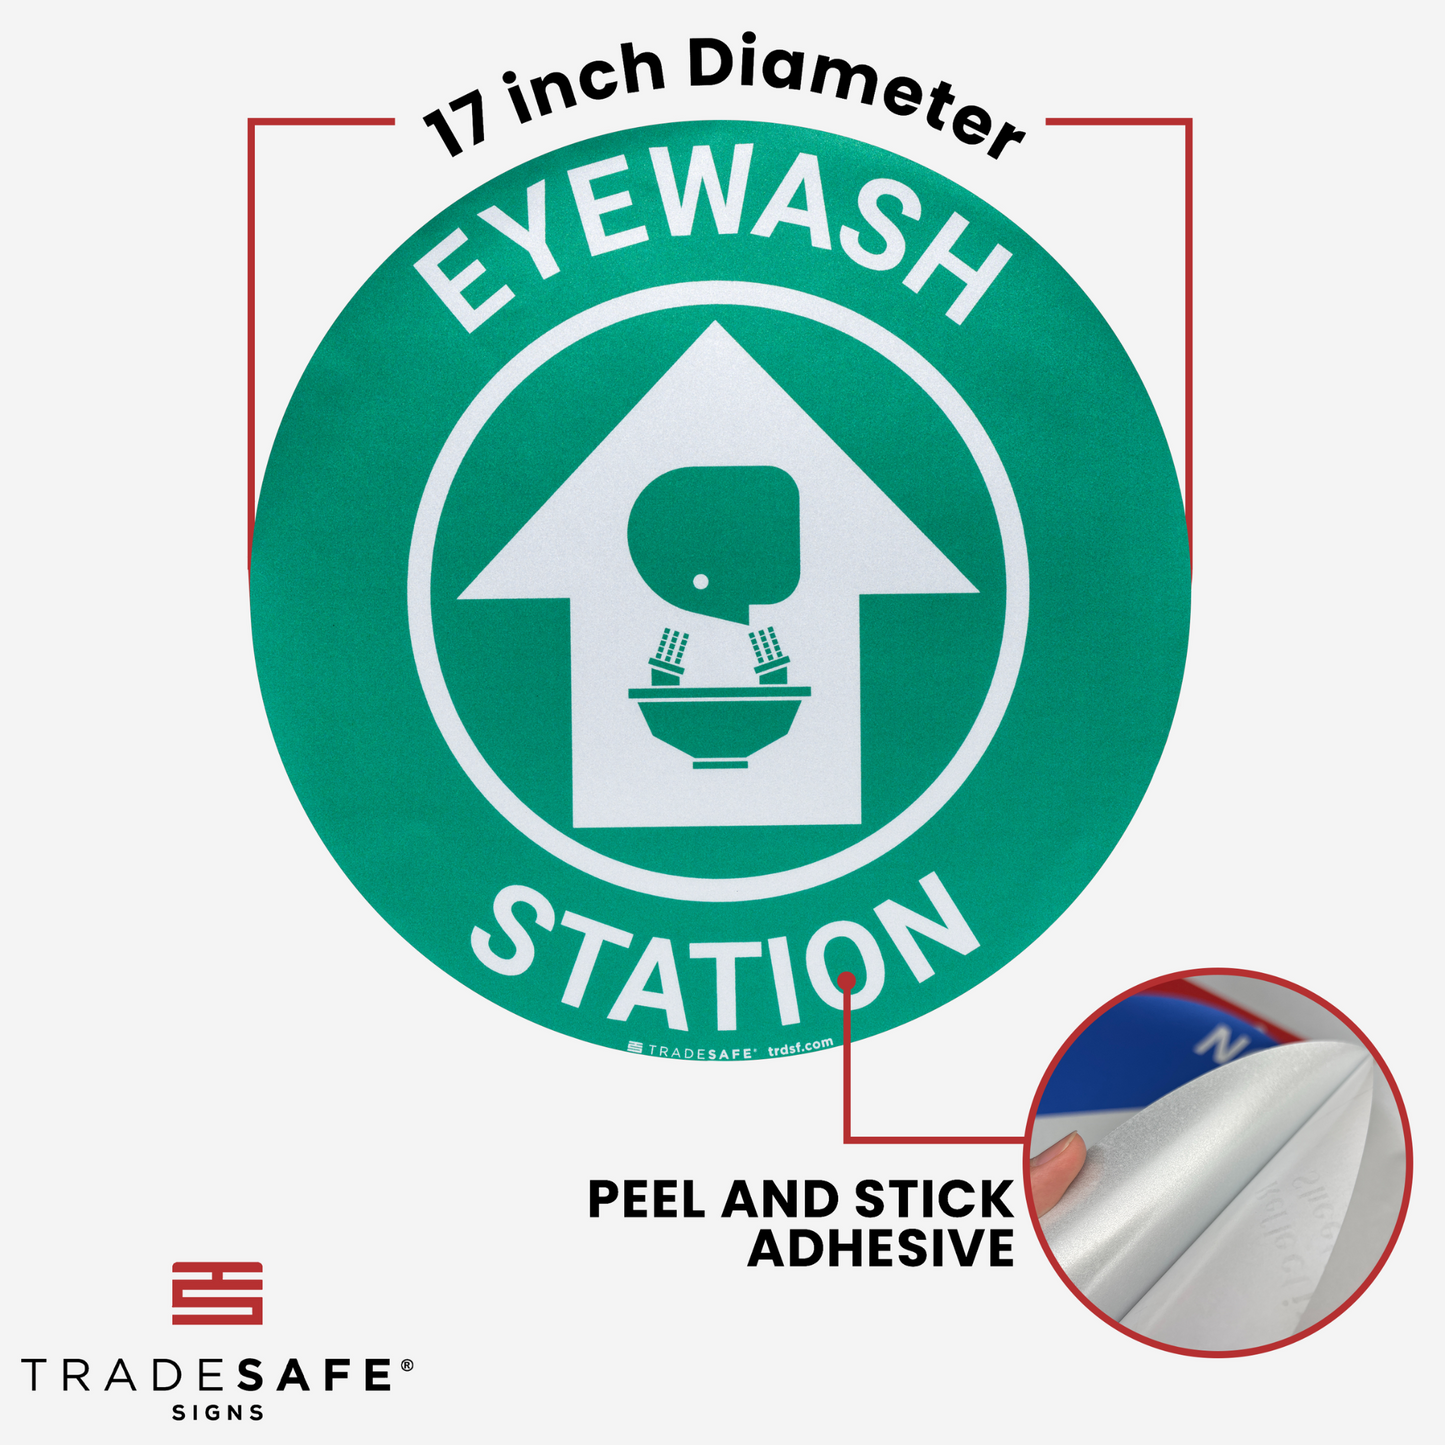 dimensions of eyewash station sign